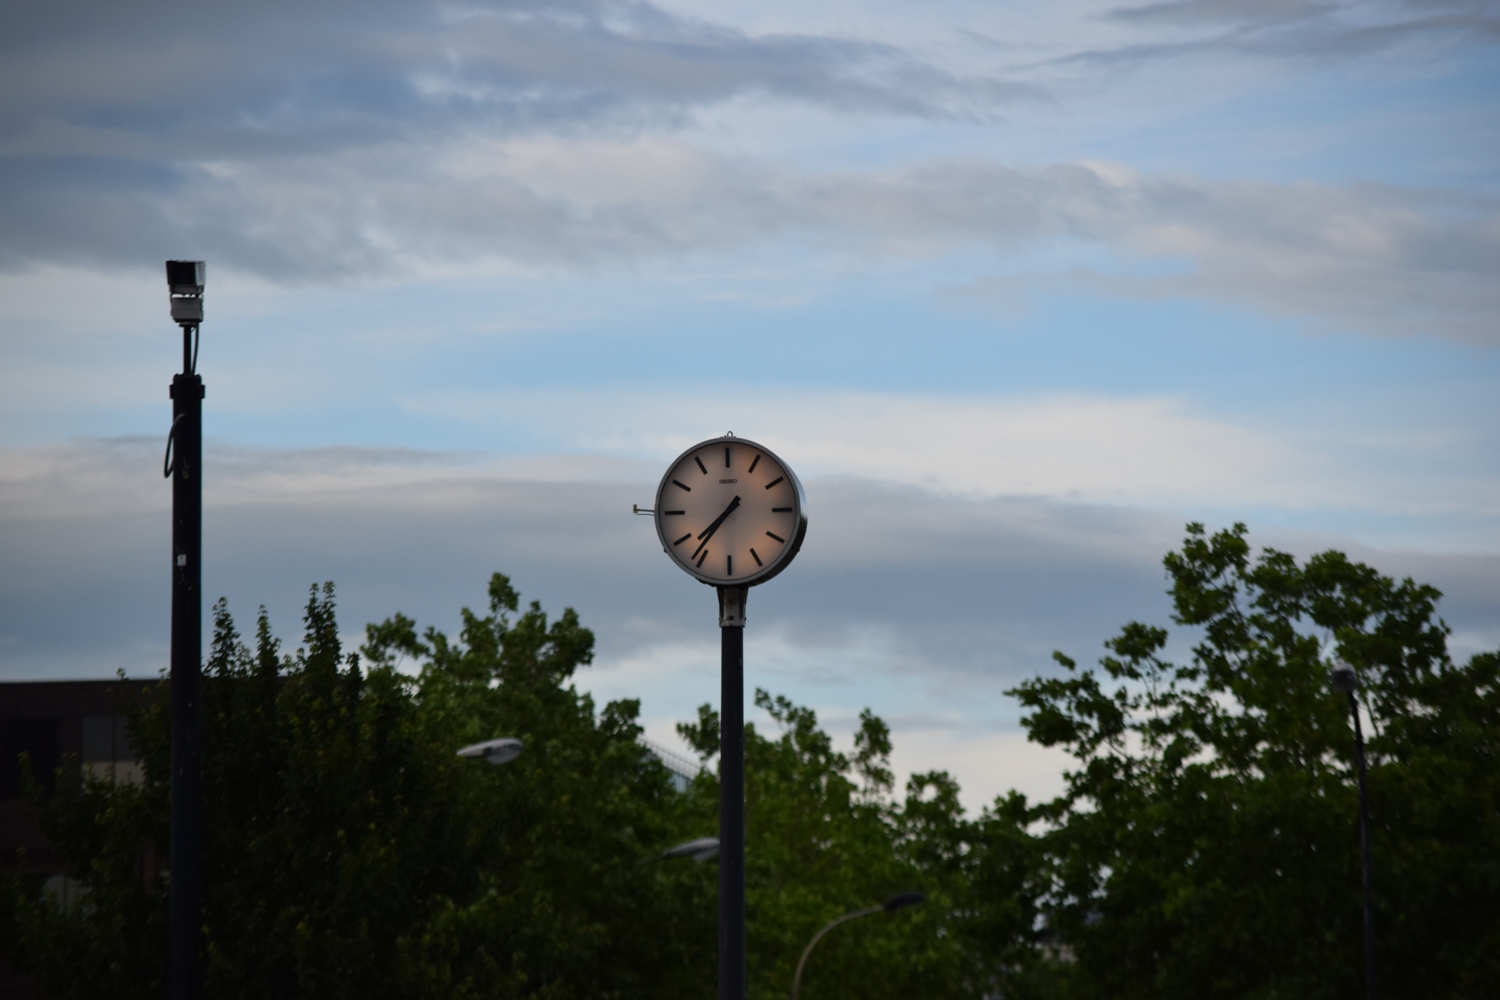 Nikkor 55-300mm clock seen from 30m, Elder Gate, Milton Keynes, 135 mm